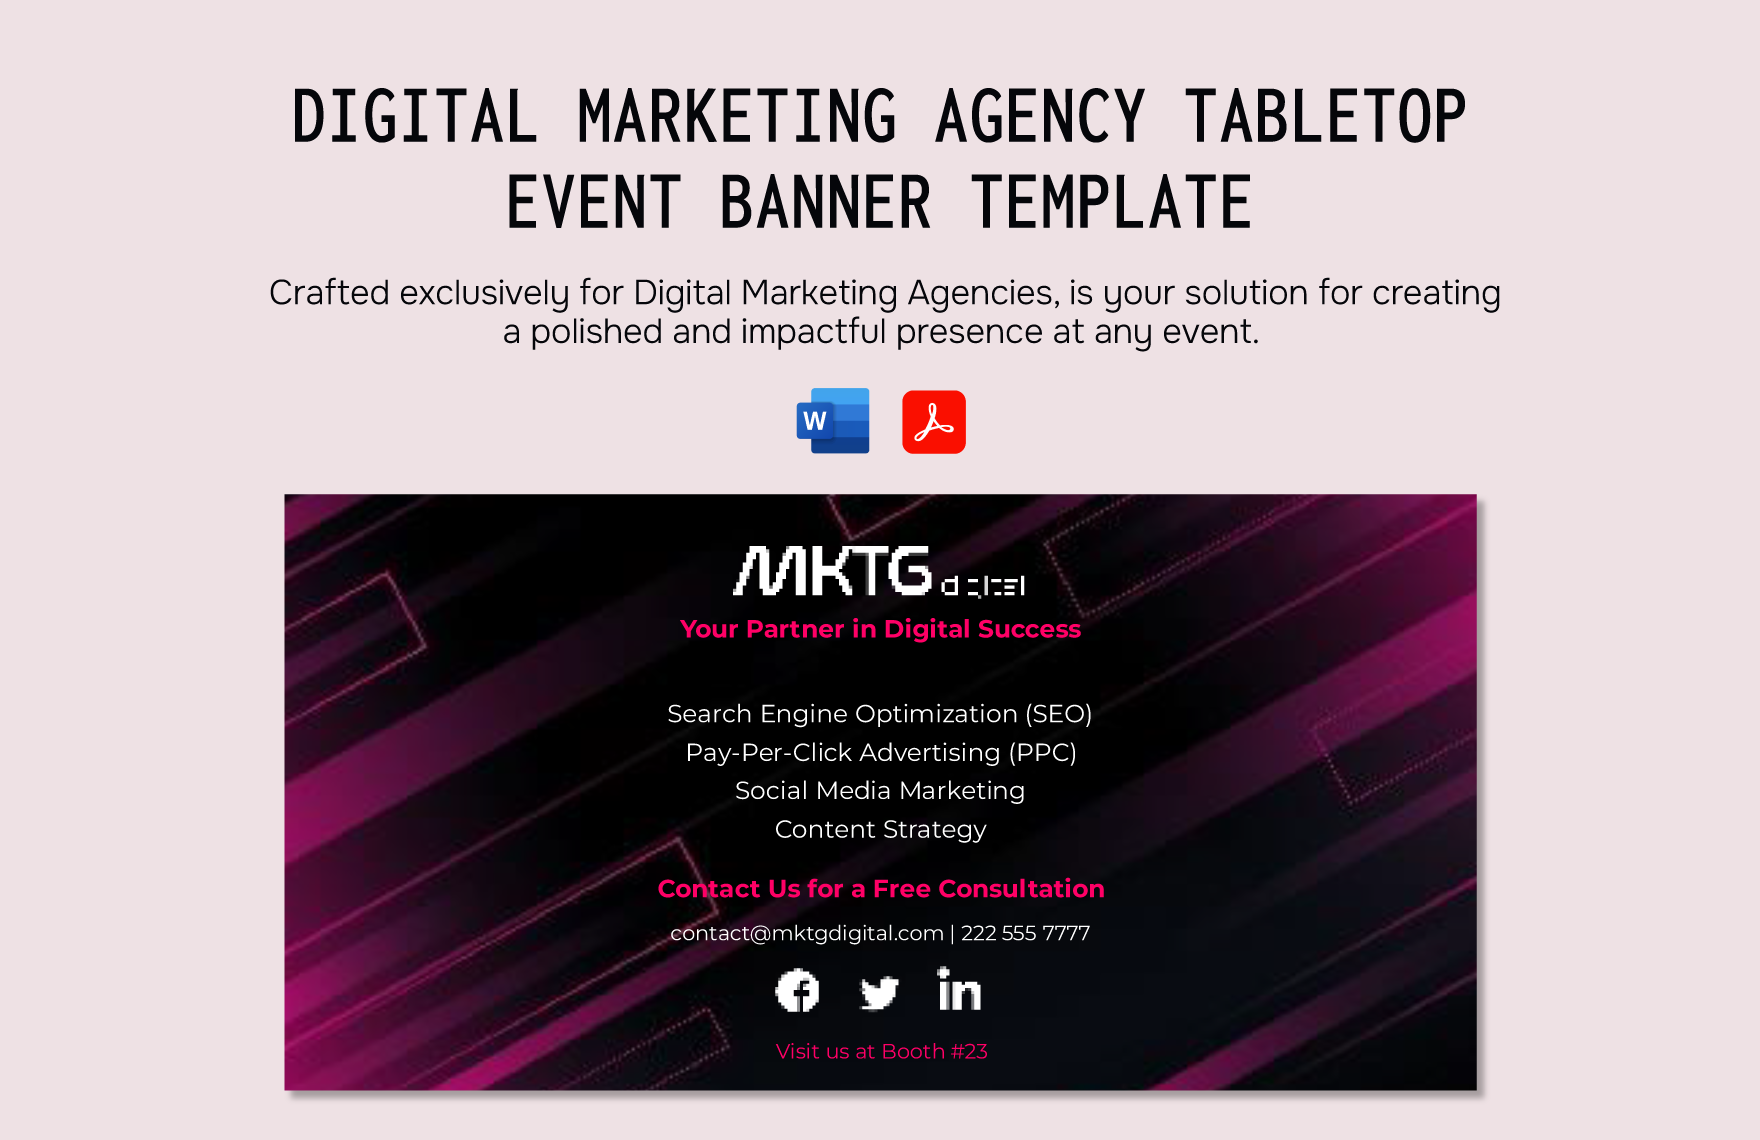 Digital Marketing Agency Tabletop Event Banner Template